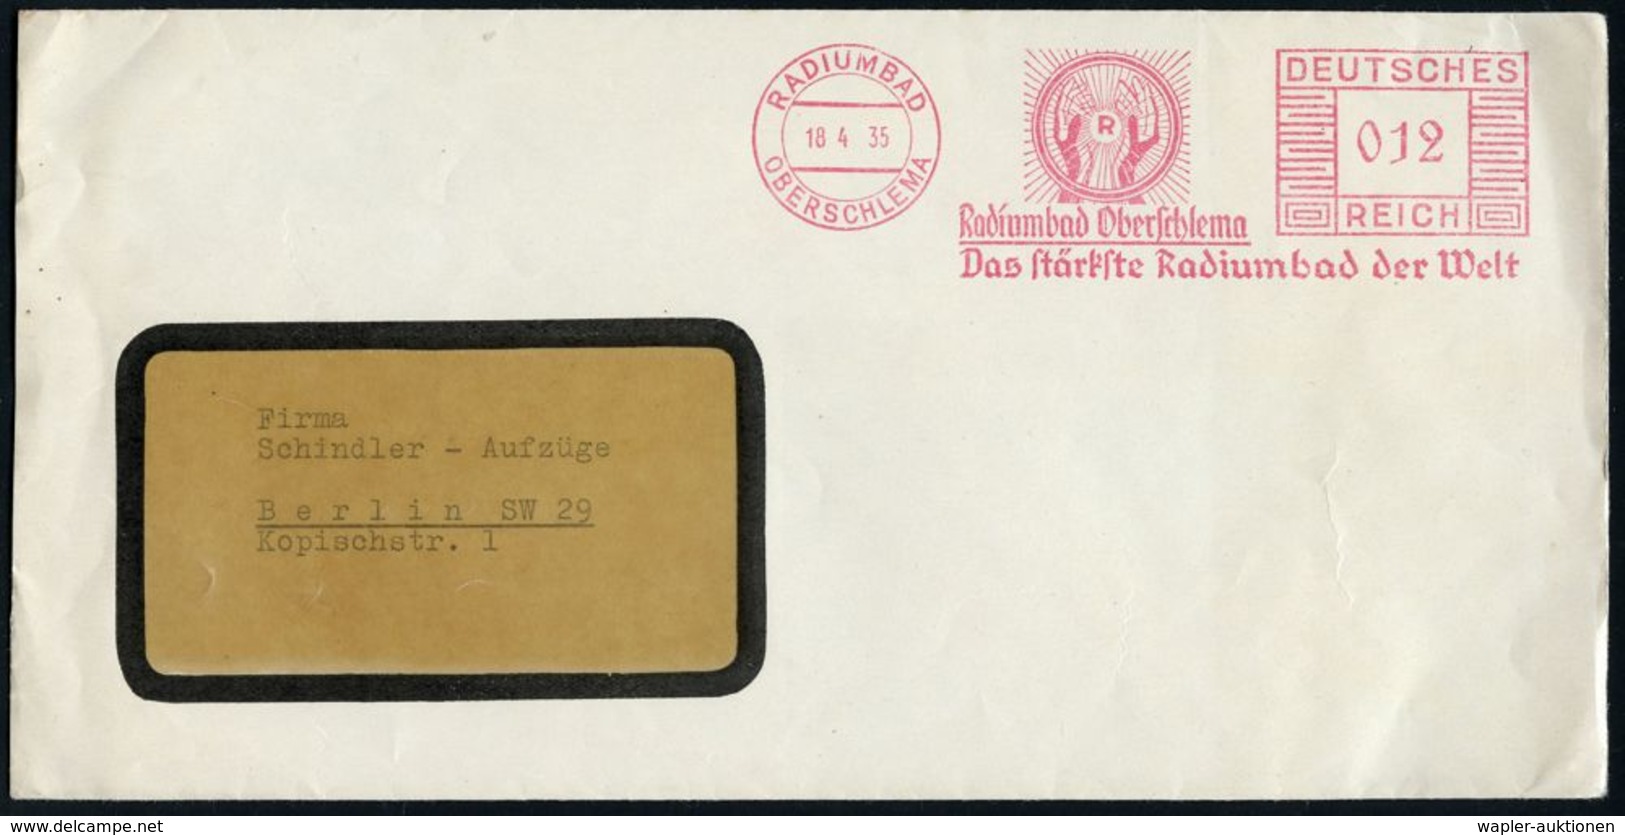 ATOM / KERNENERGIE / RÖNTGEN / RADIOAKTIVITÄT : OBERSCHLEMA RADIUMBAD/ Das Stärkste Radiumbad Der Welt 1935 (18.4.) Selt - Atom